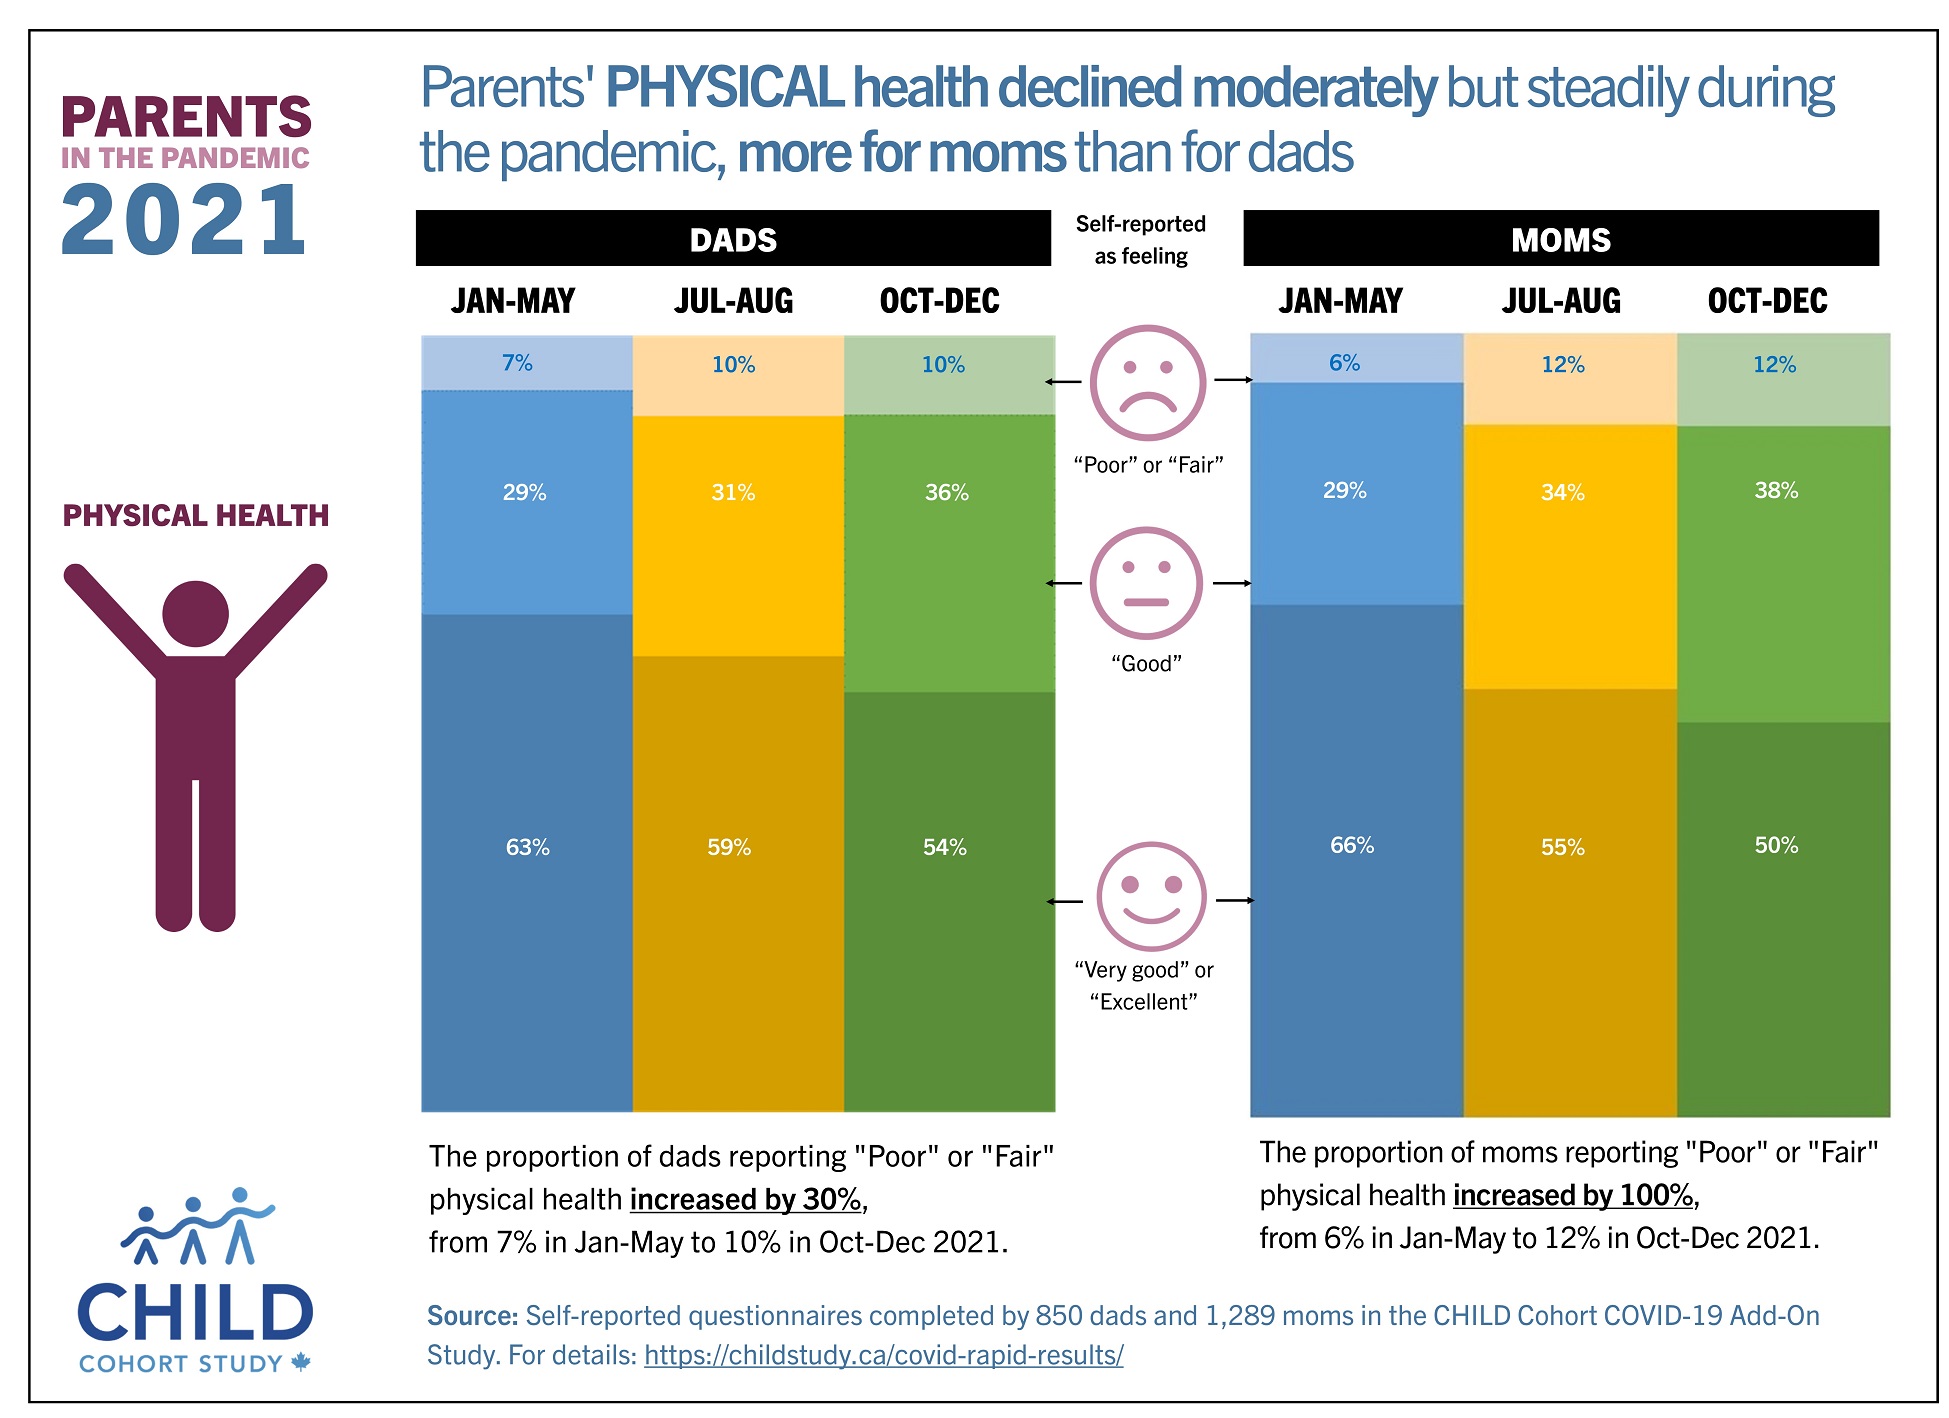 Parents' physical health (December 2021)